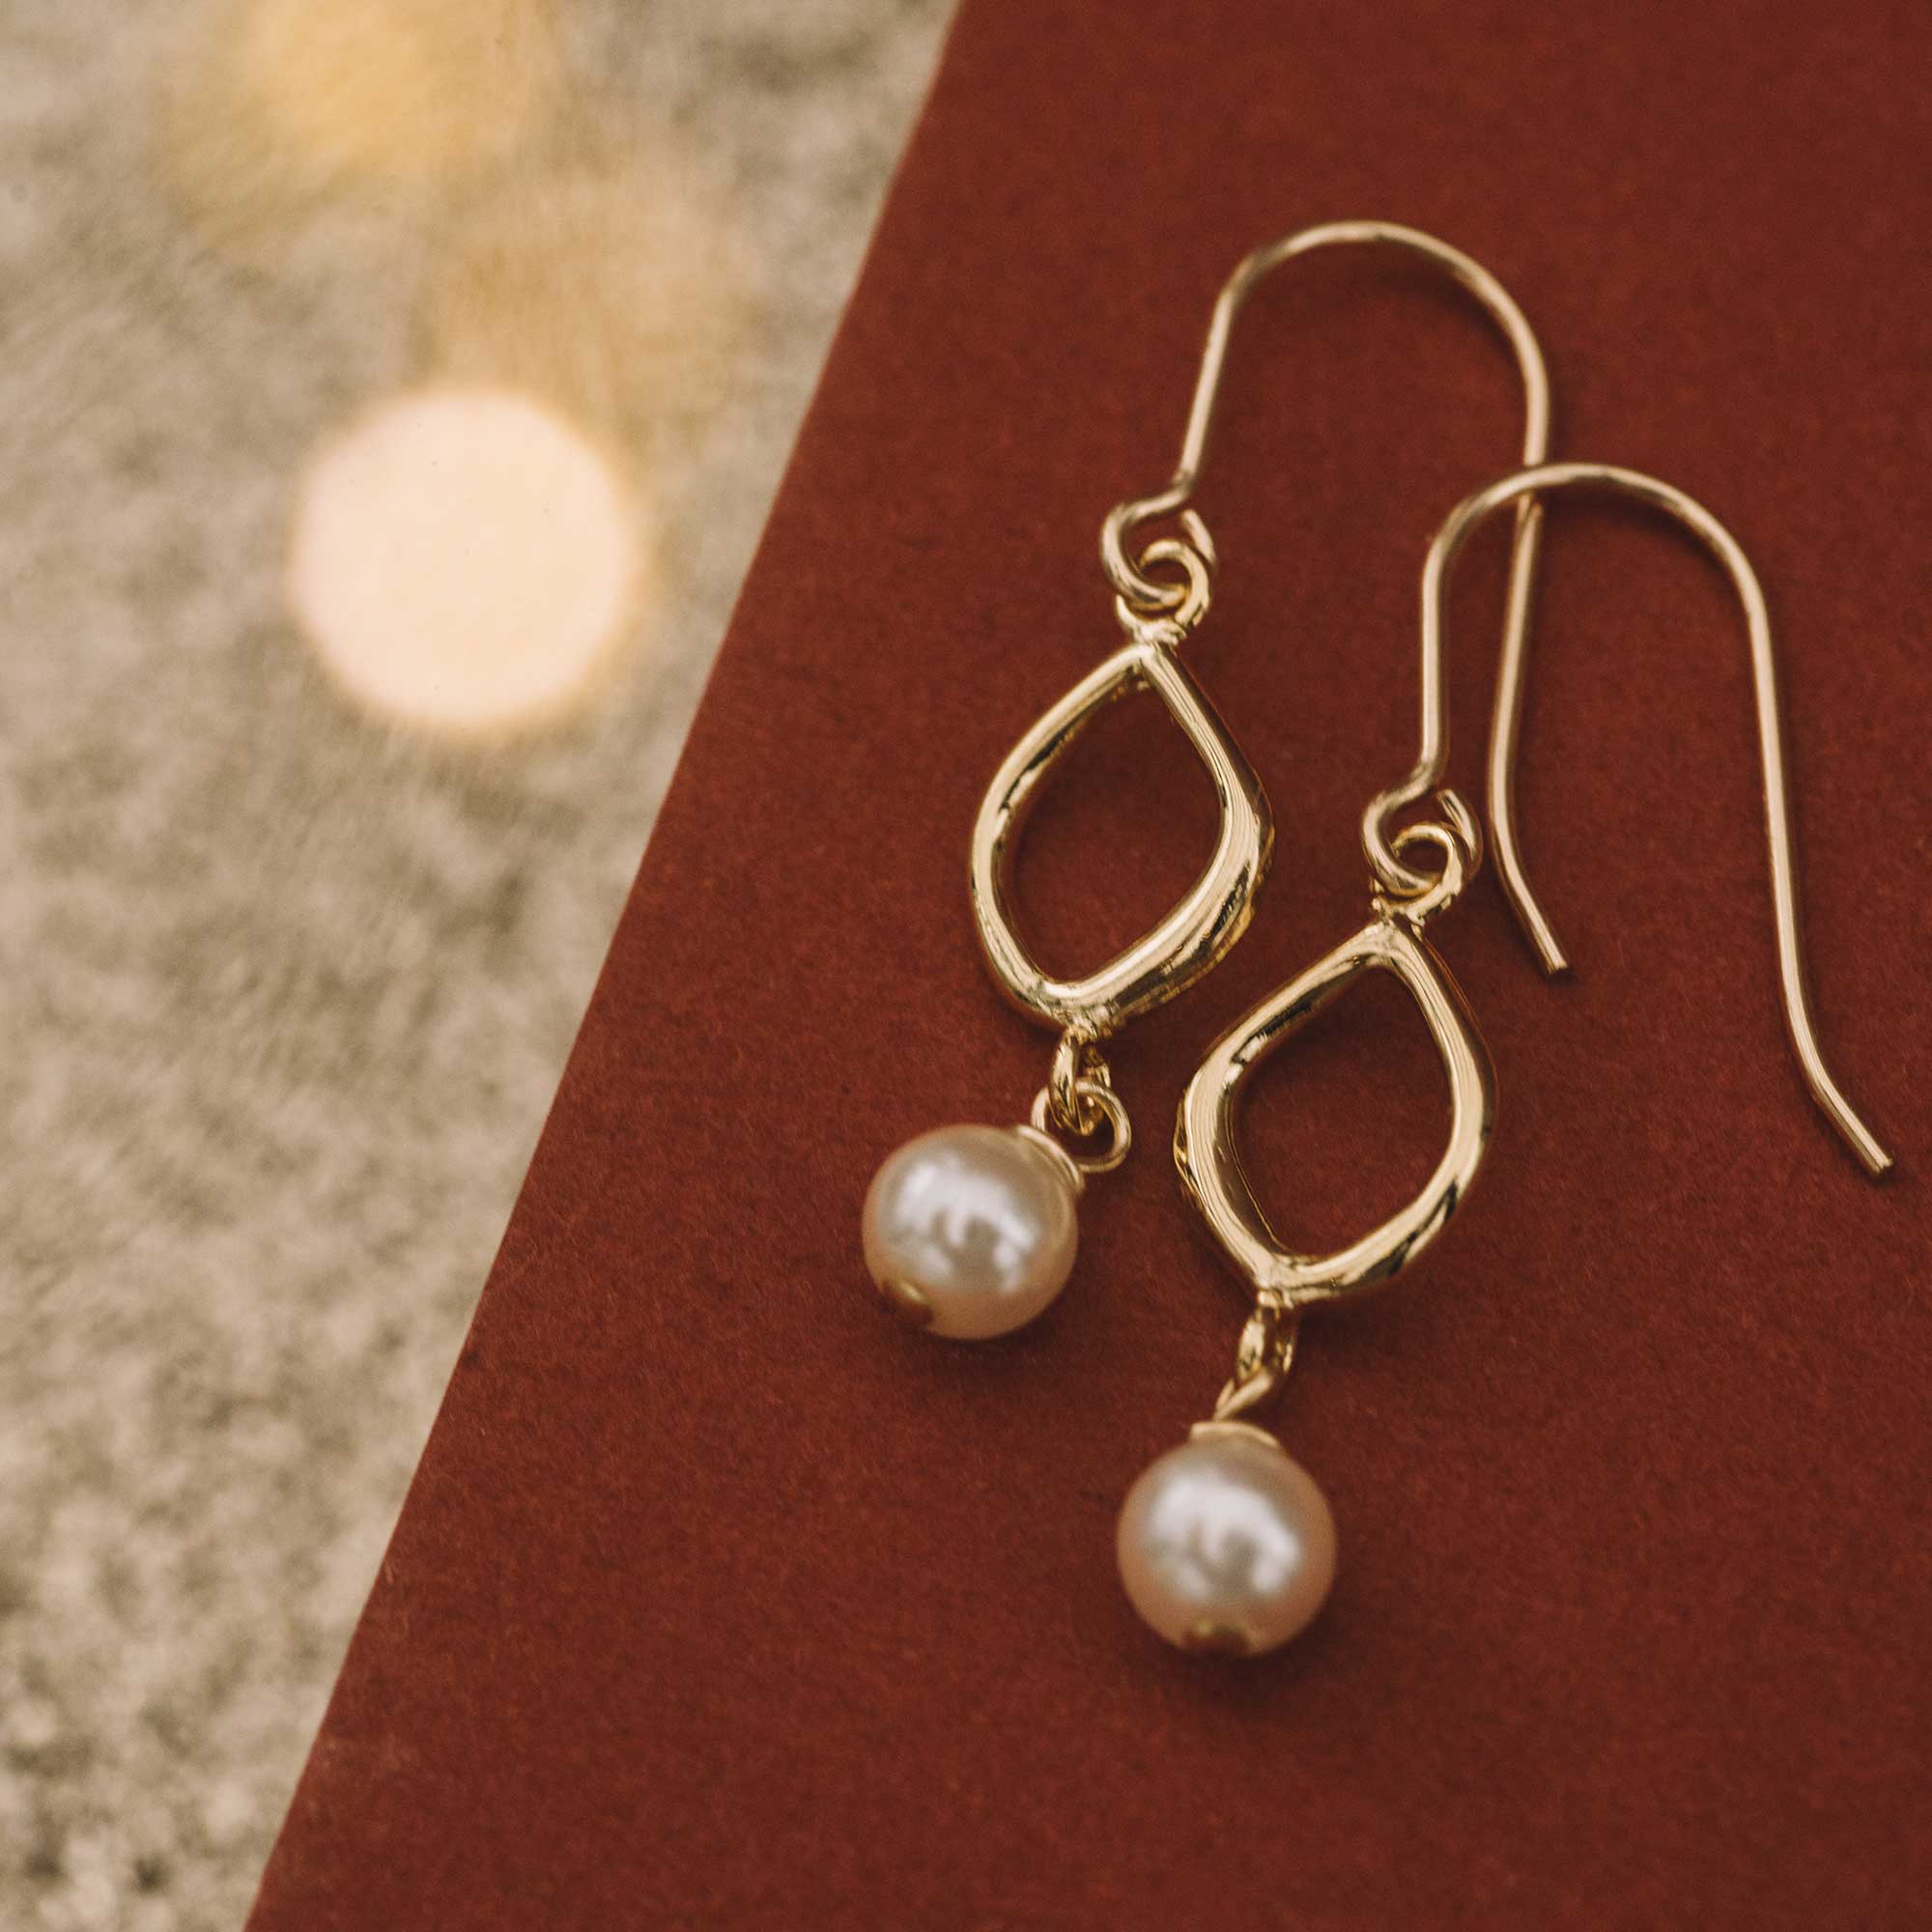 14k gold filled earrings with pearls sandrine devost